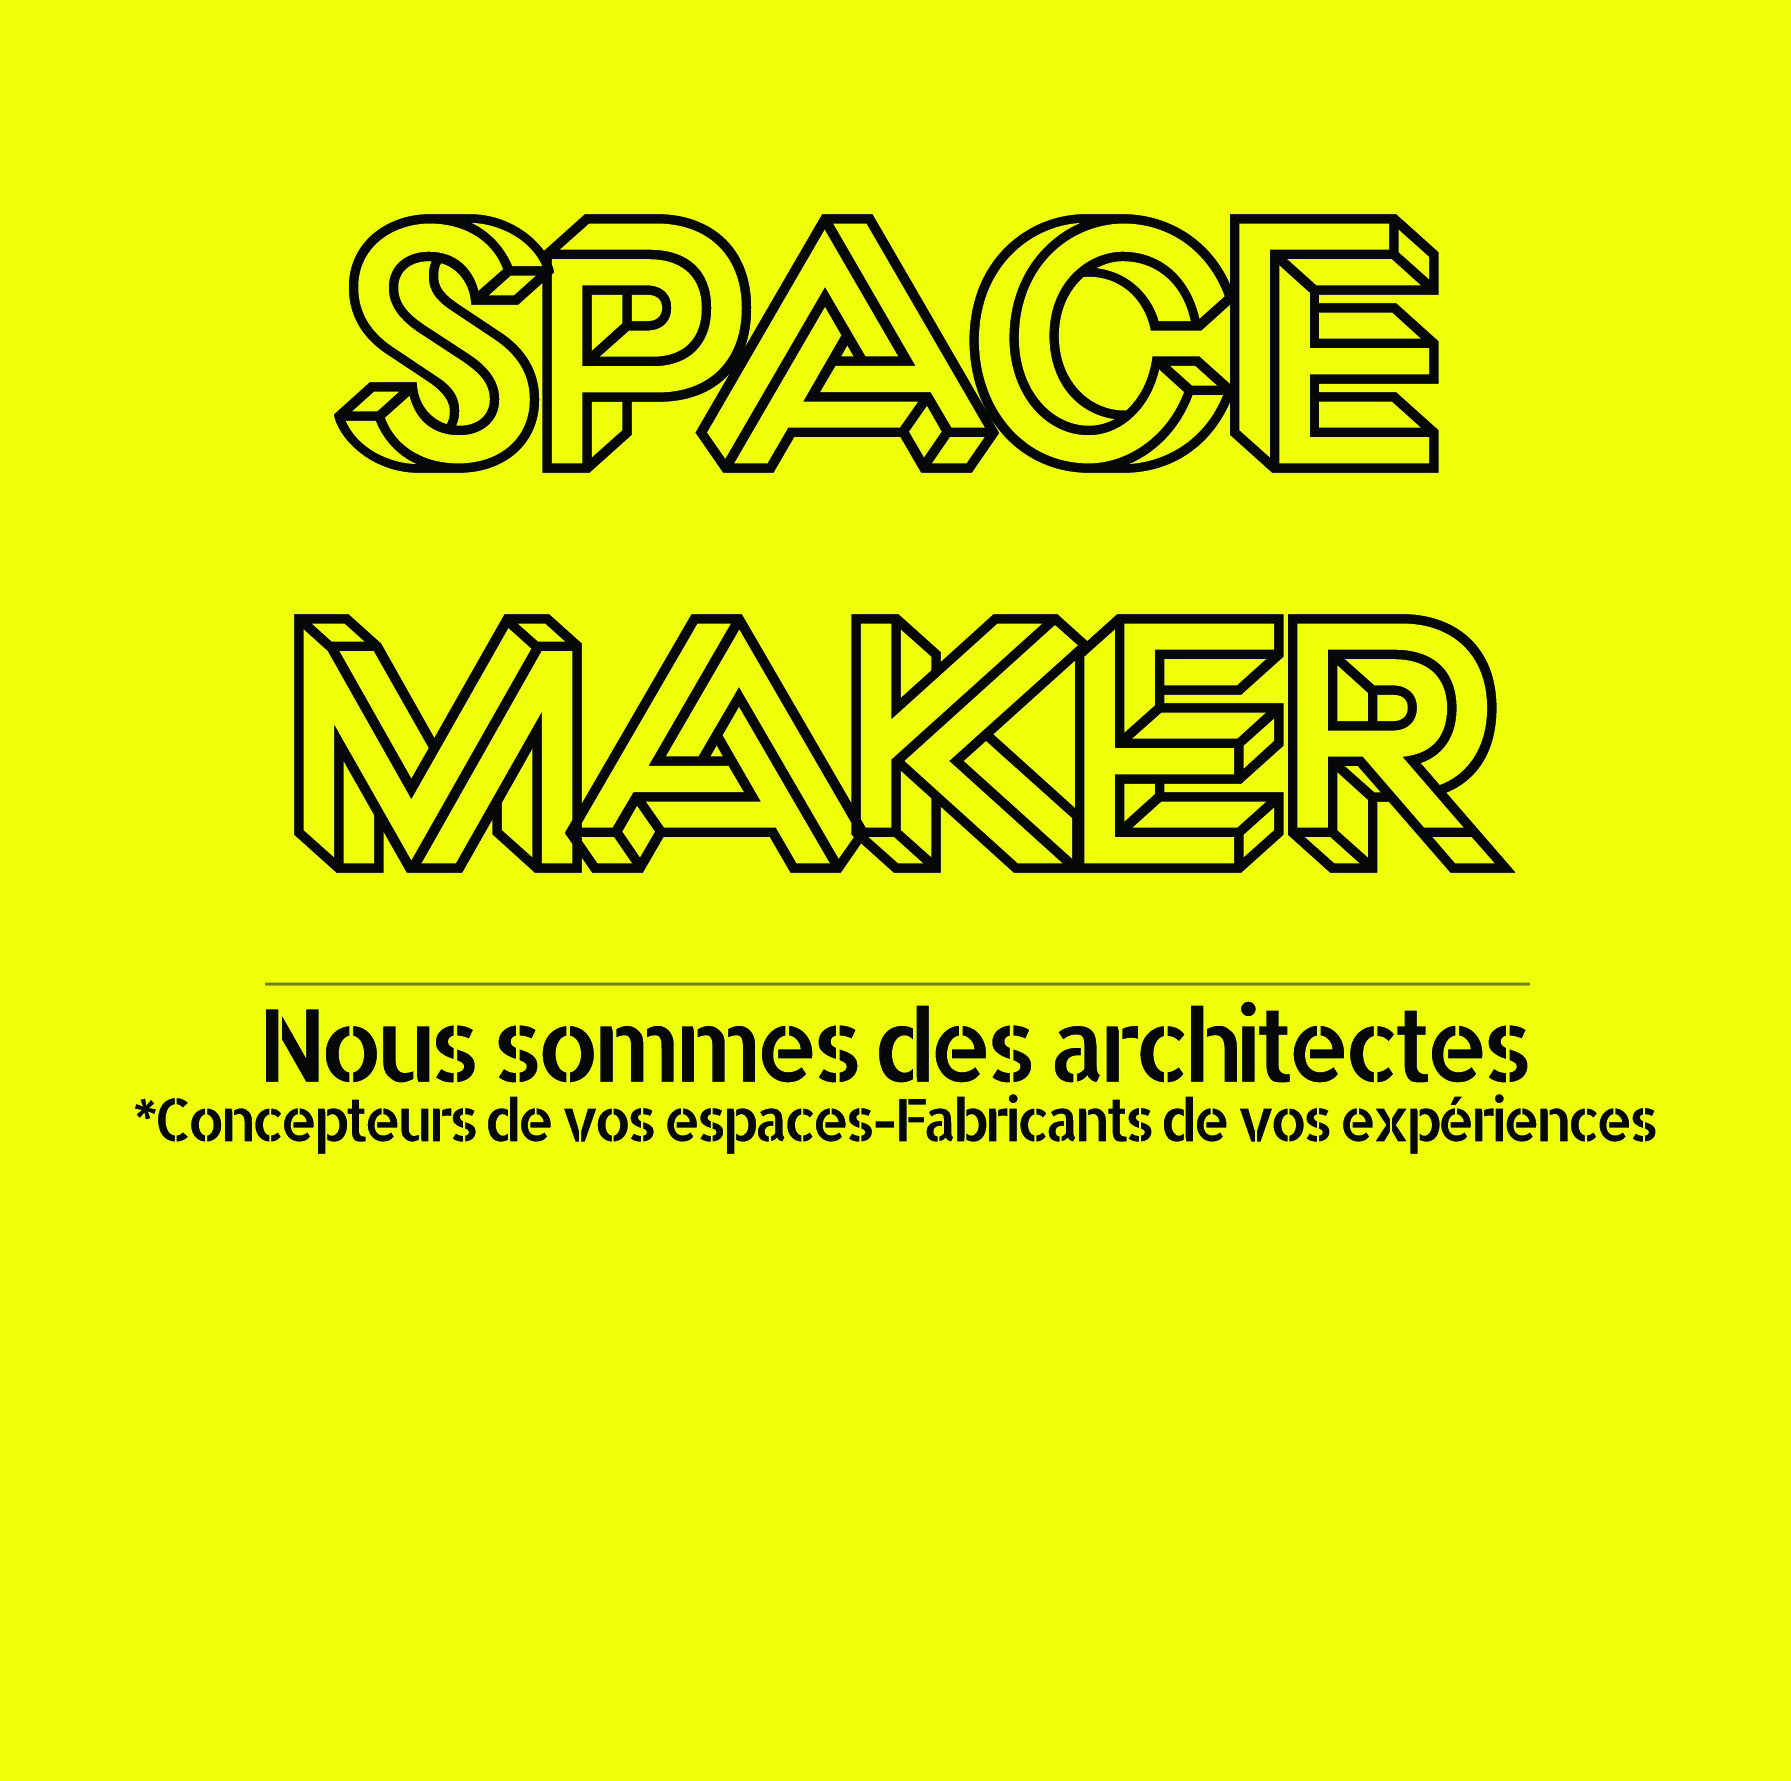 spacemaker-architecture-urbanisme-design